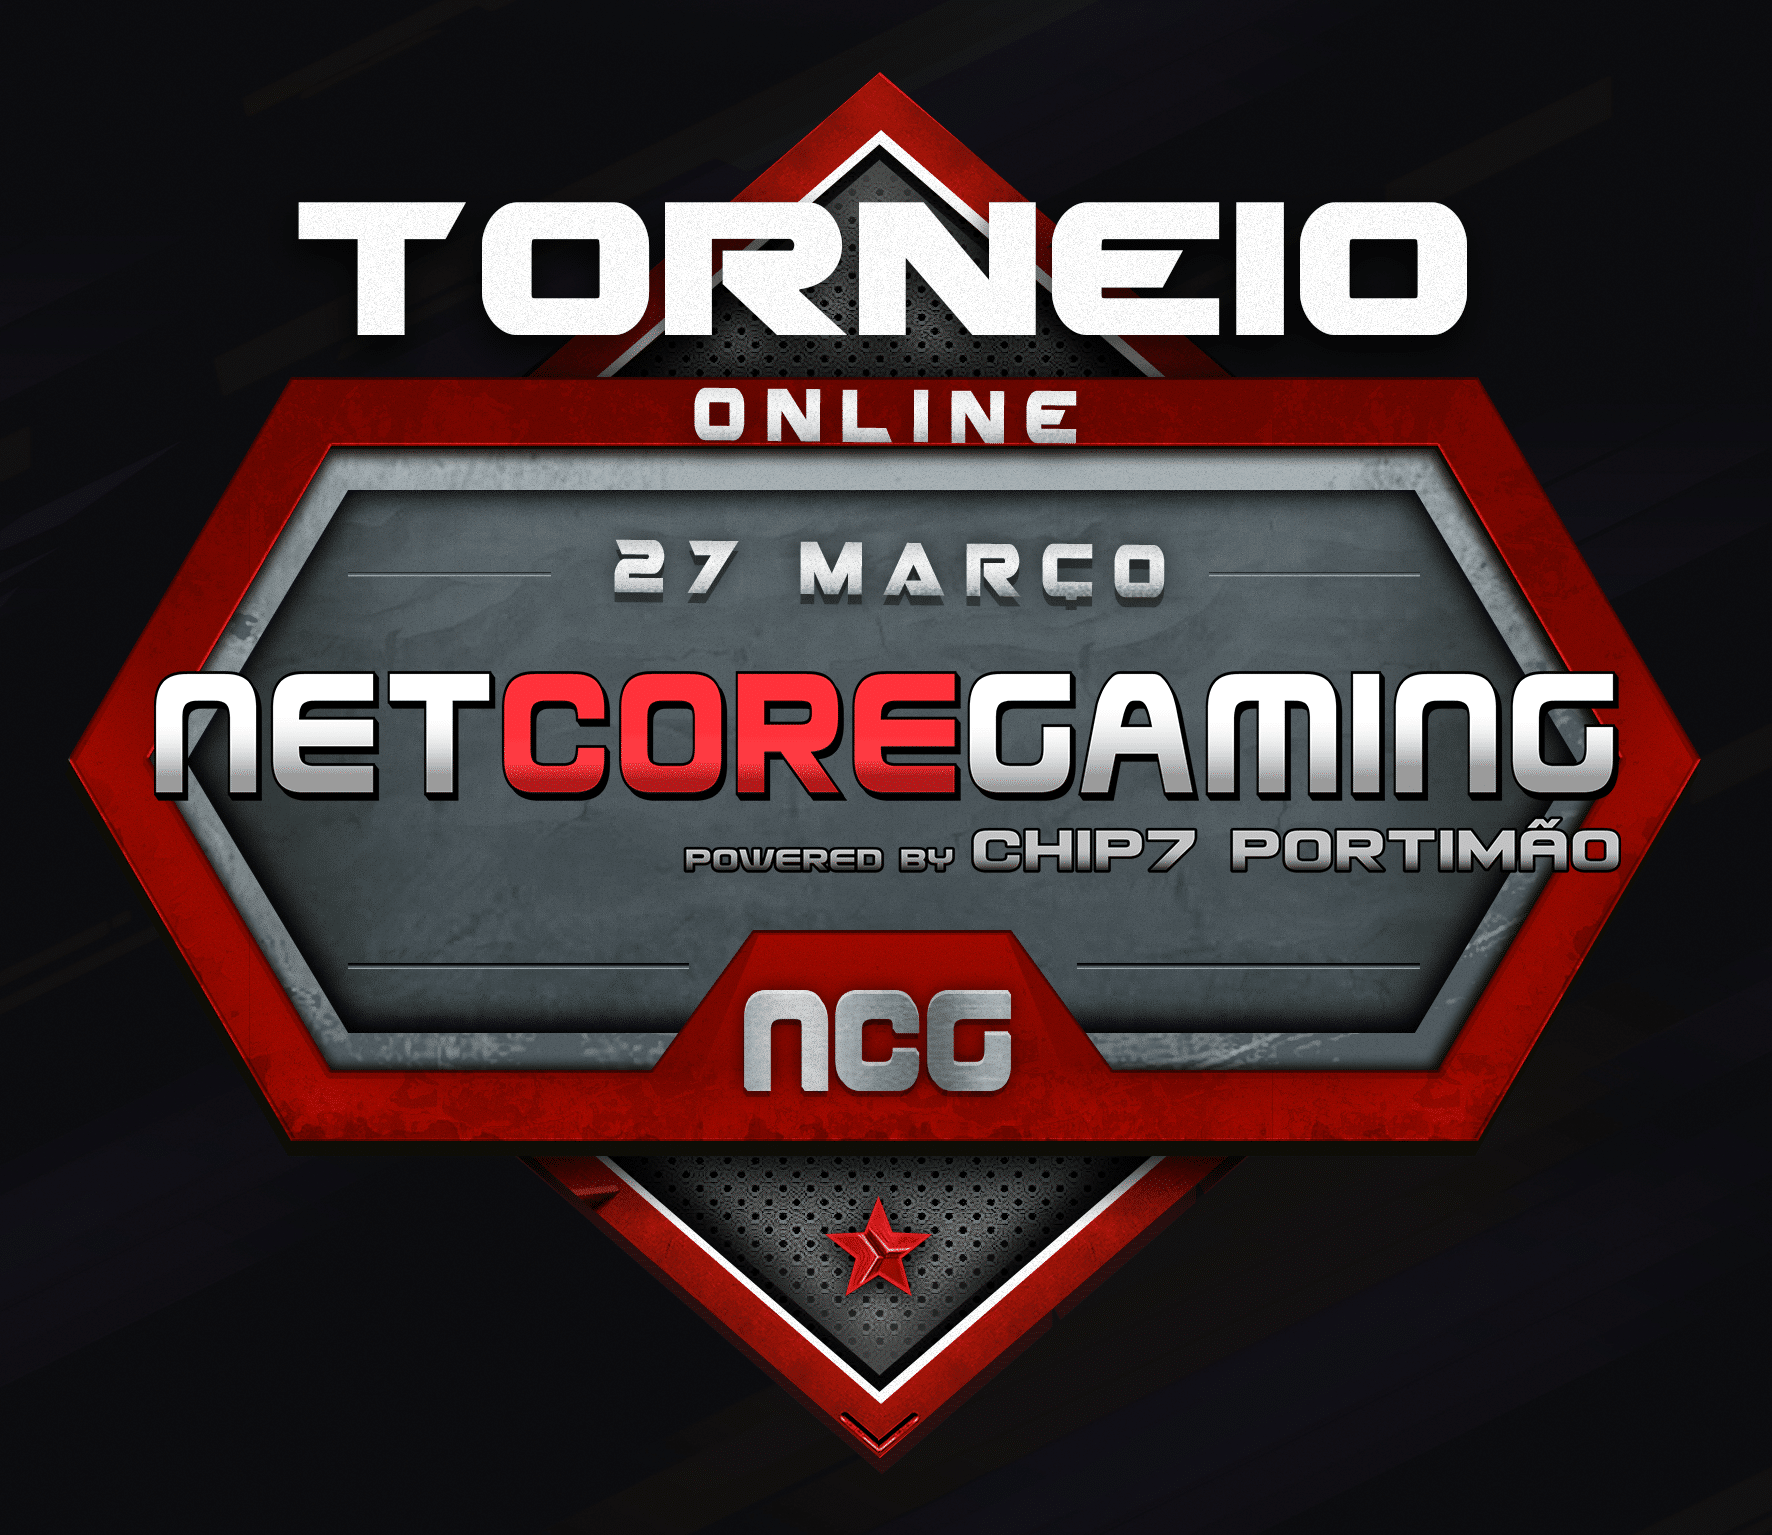 1º Torneio Online Netcoregaming